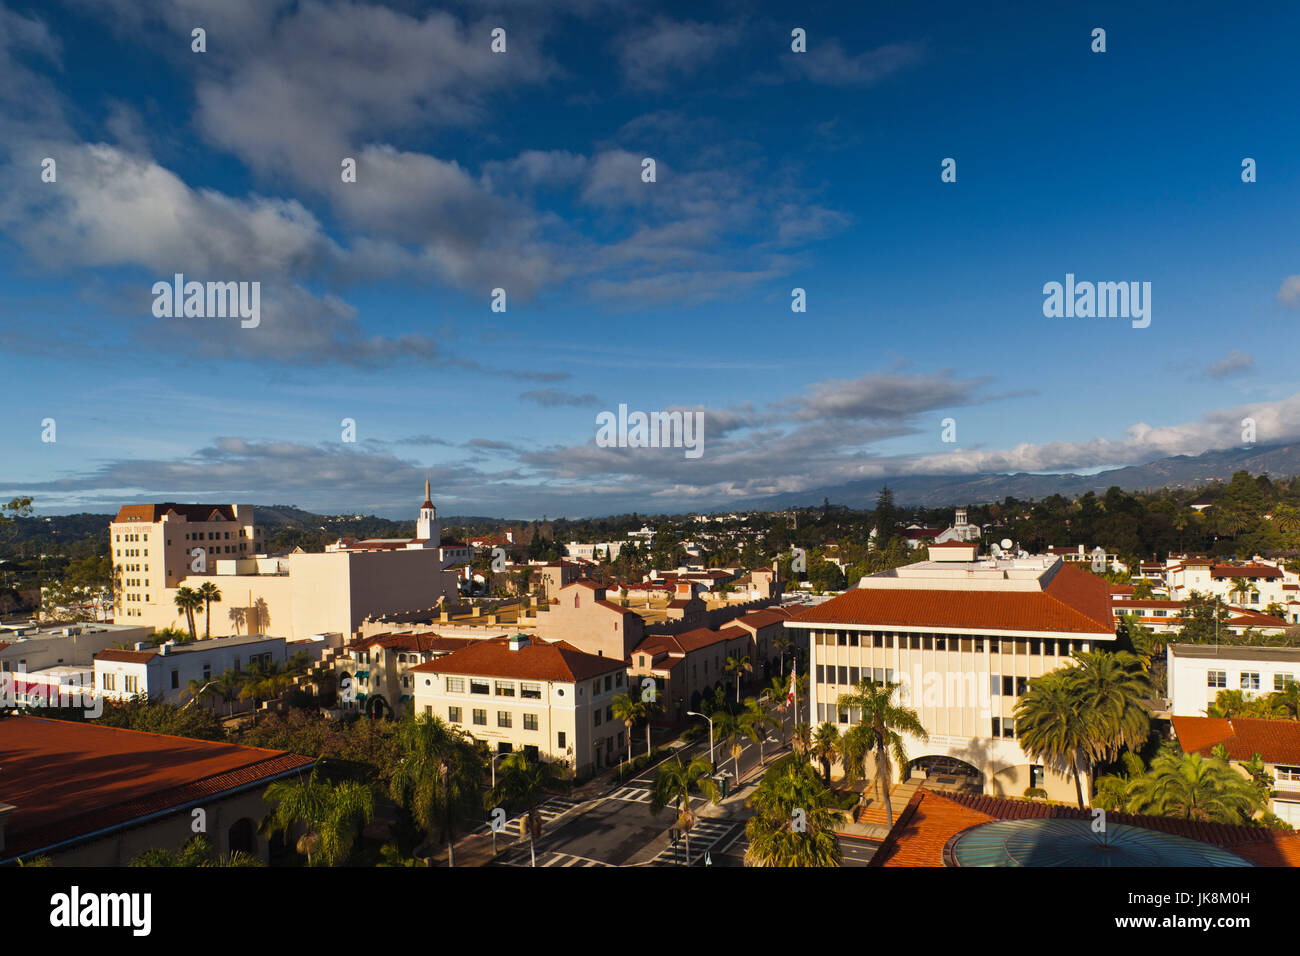 USA, California, Southern California, Santa Barbara, erhöhten Blick auf die Stadt von Santa Barbara County Courthouse Stockfoto